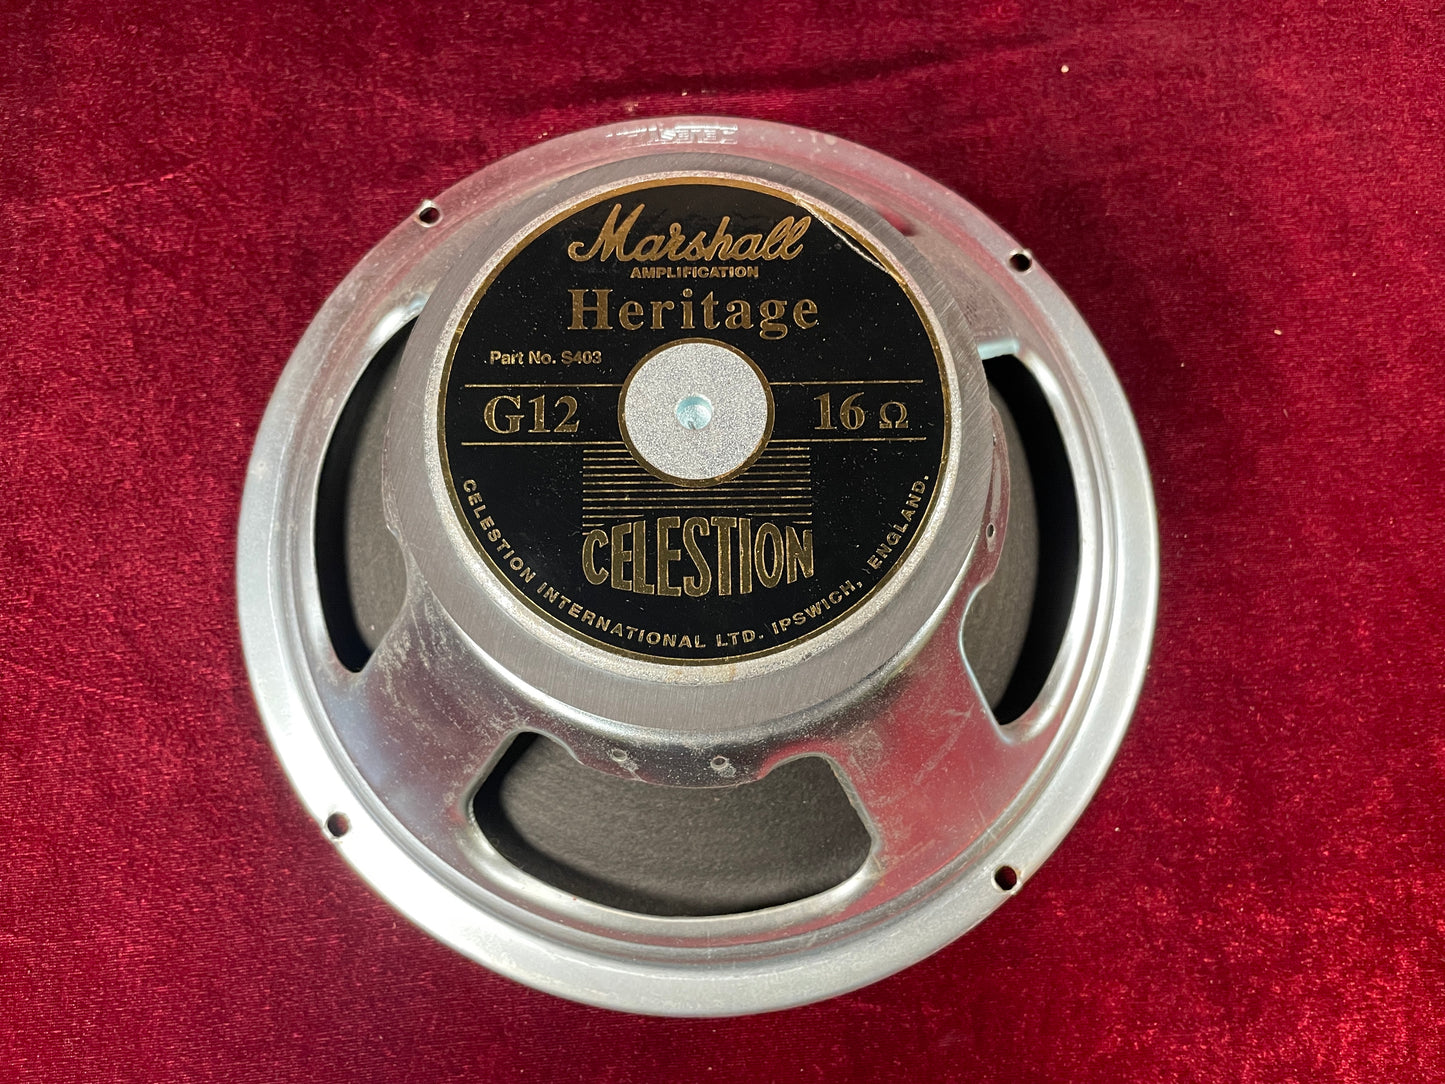 Celestion 12" 70W Marshall Heritage G12 Guitar Speaker 16 Ohm (Stock #12)